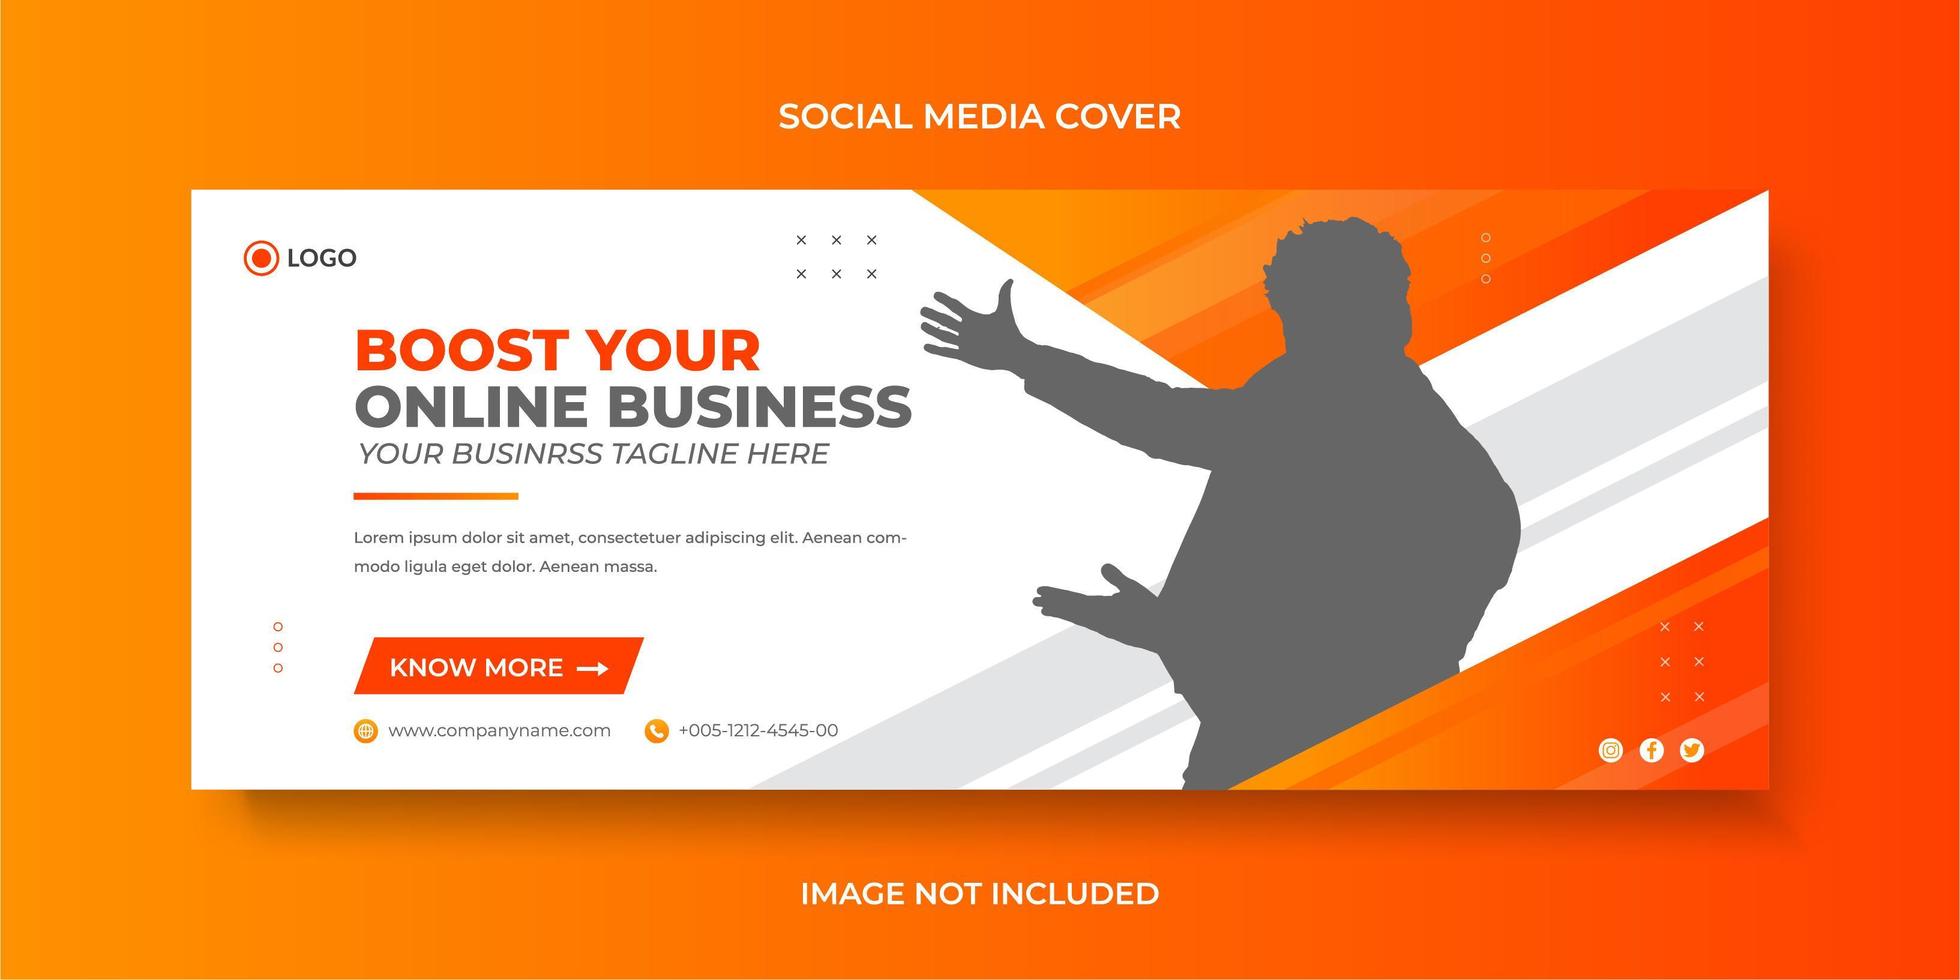 banner de mídia social corporativa e empresarial ou modelo de capa com design de forma abstrata vetor